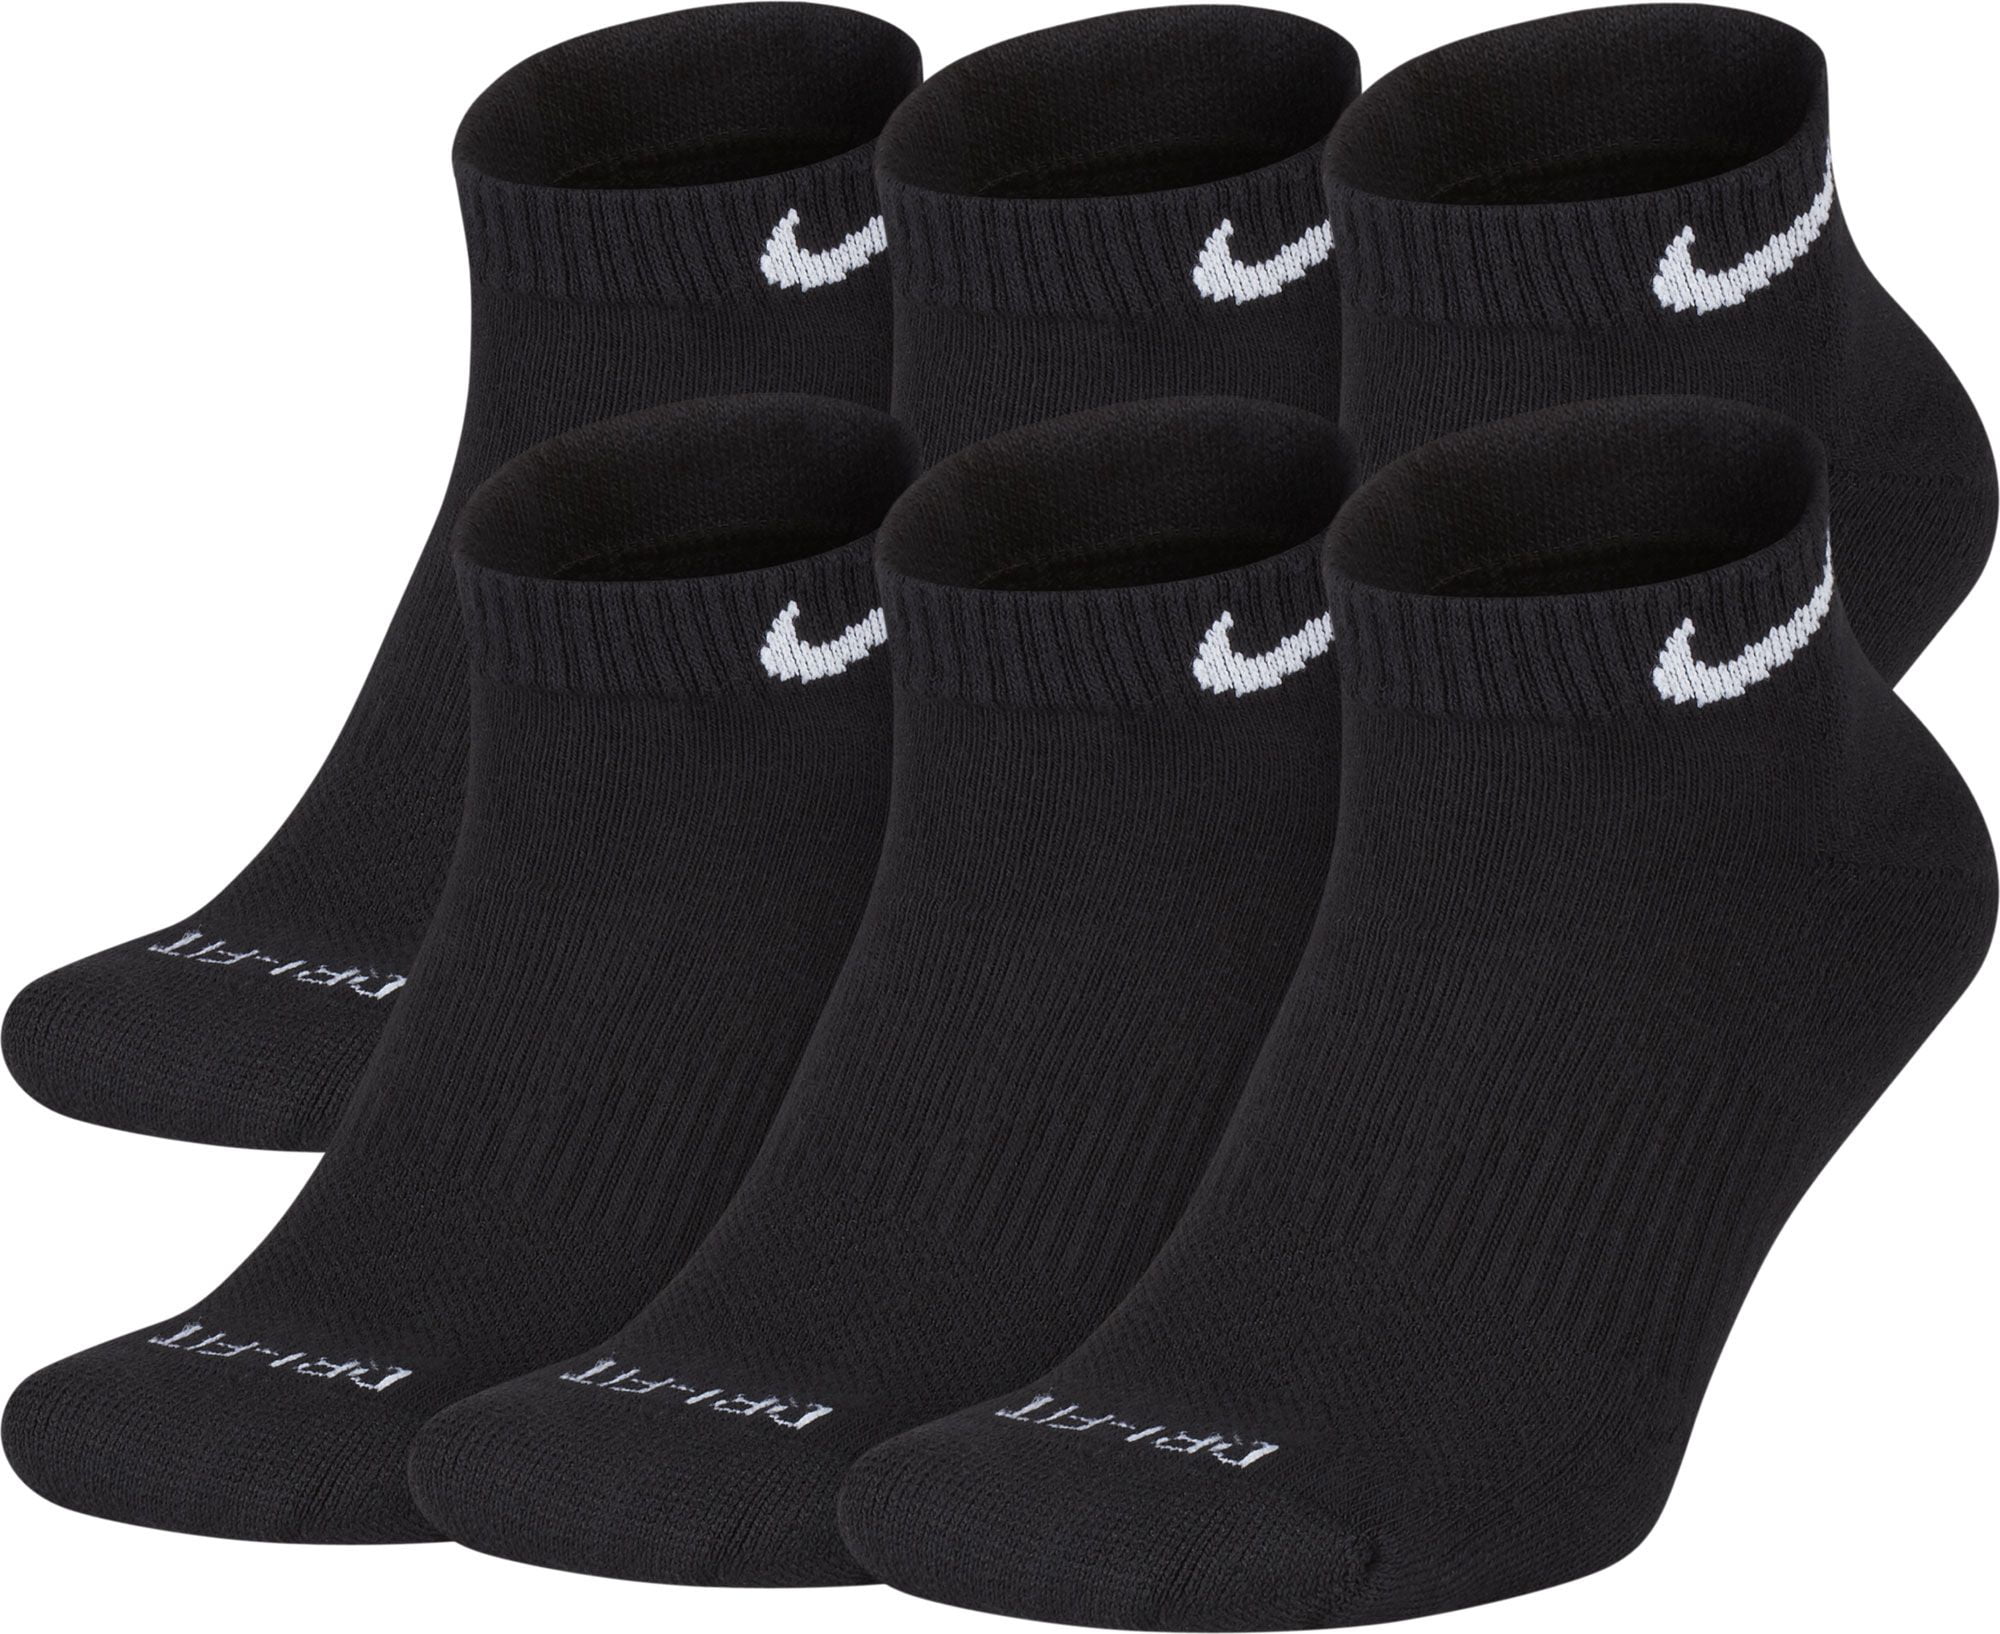 Nike Dri-FIT Everyday Plus Cushion Training Low Socks 6 Pack - Walmart.com